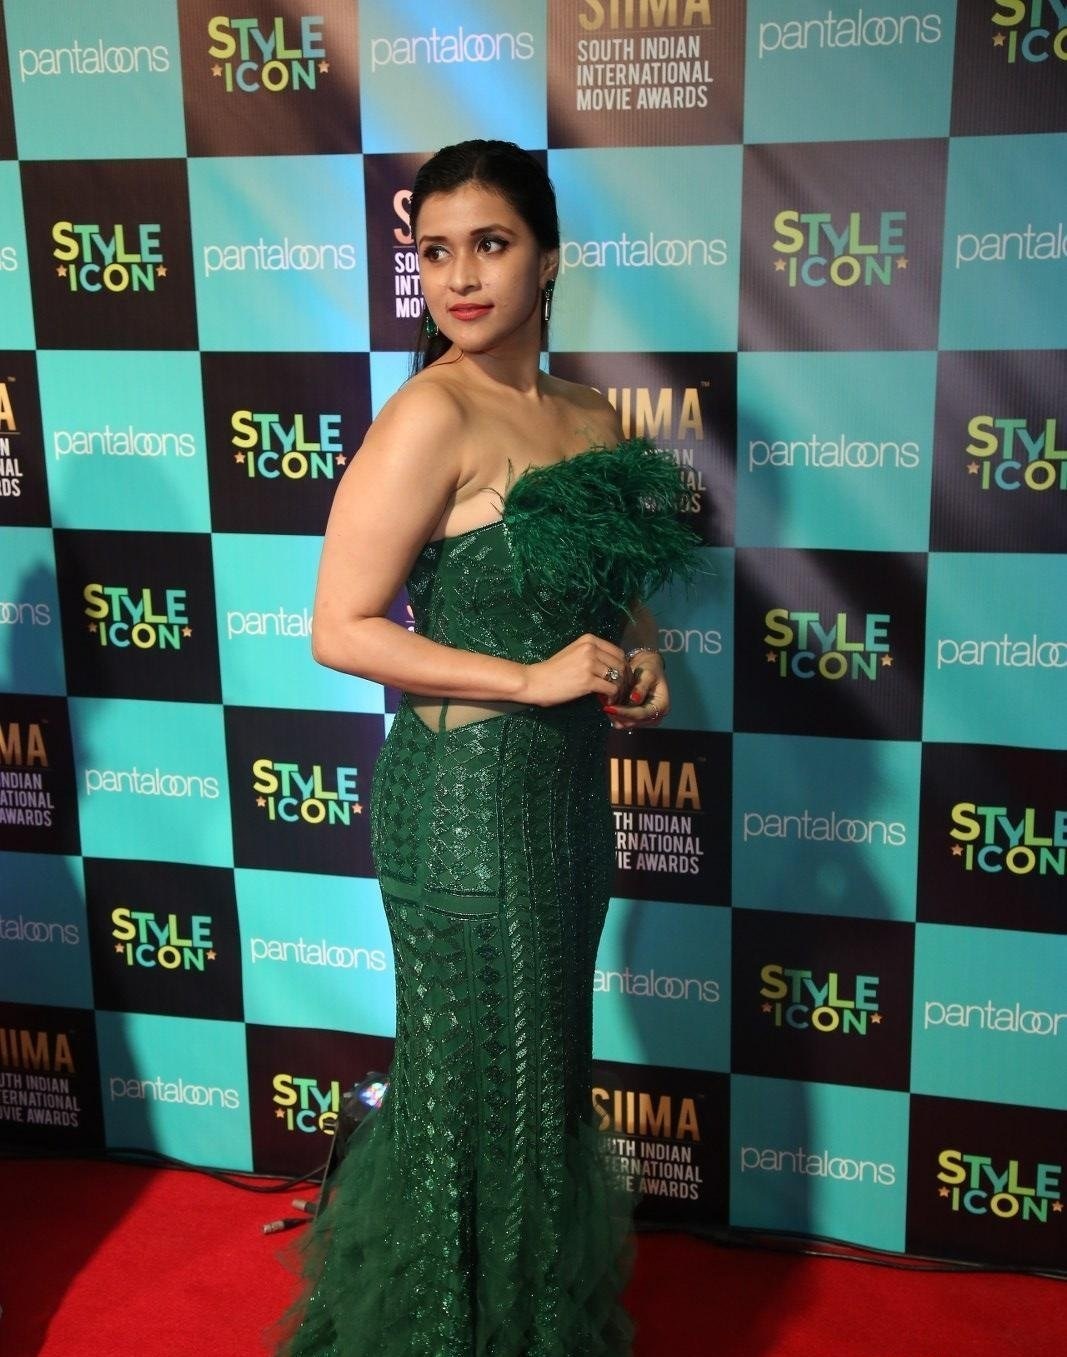 Actress Mannara Chopra Stills From SIIMA Award 2019 Red Carpet